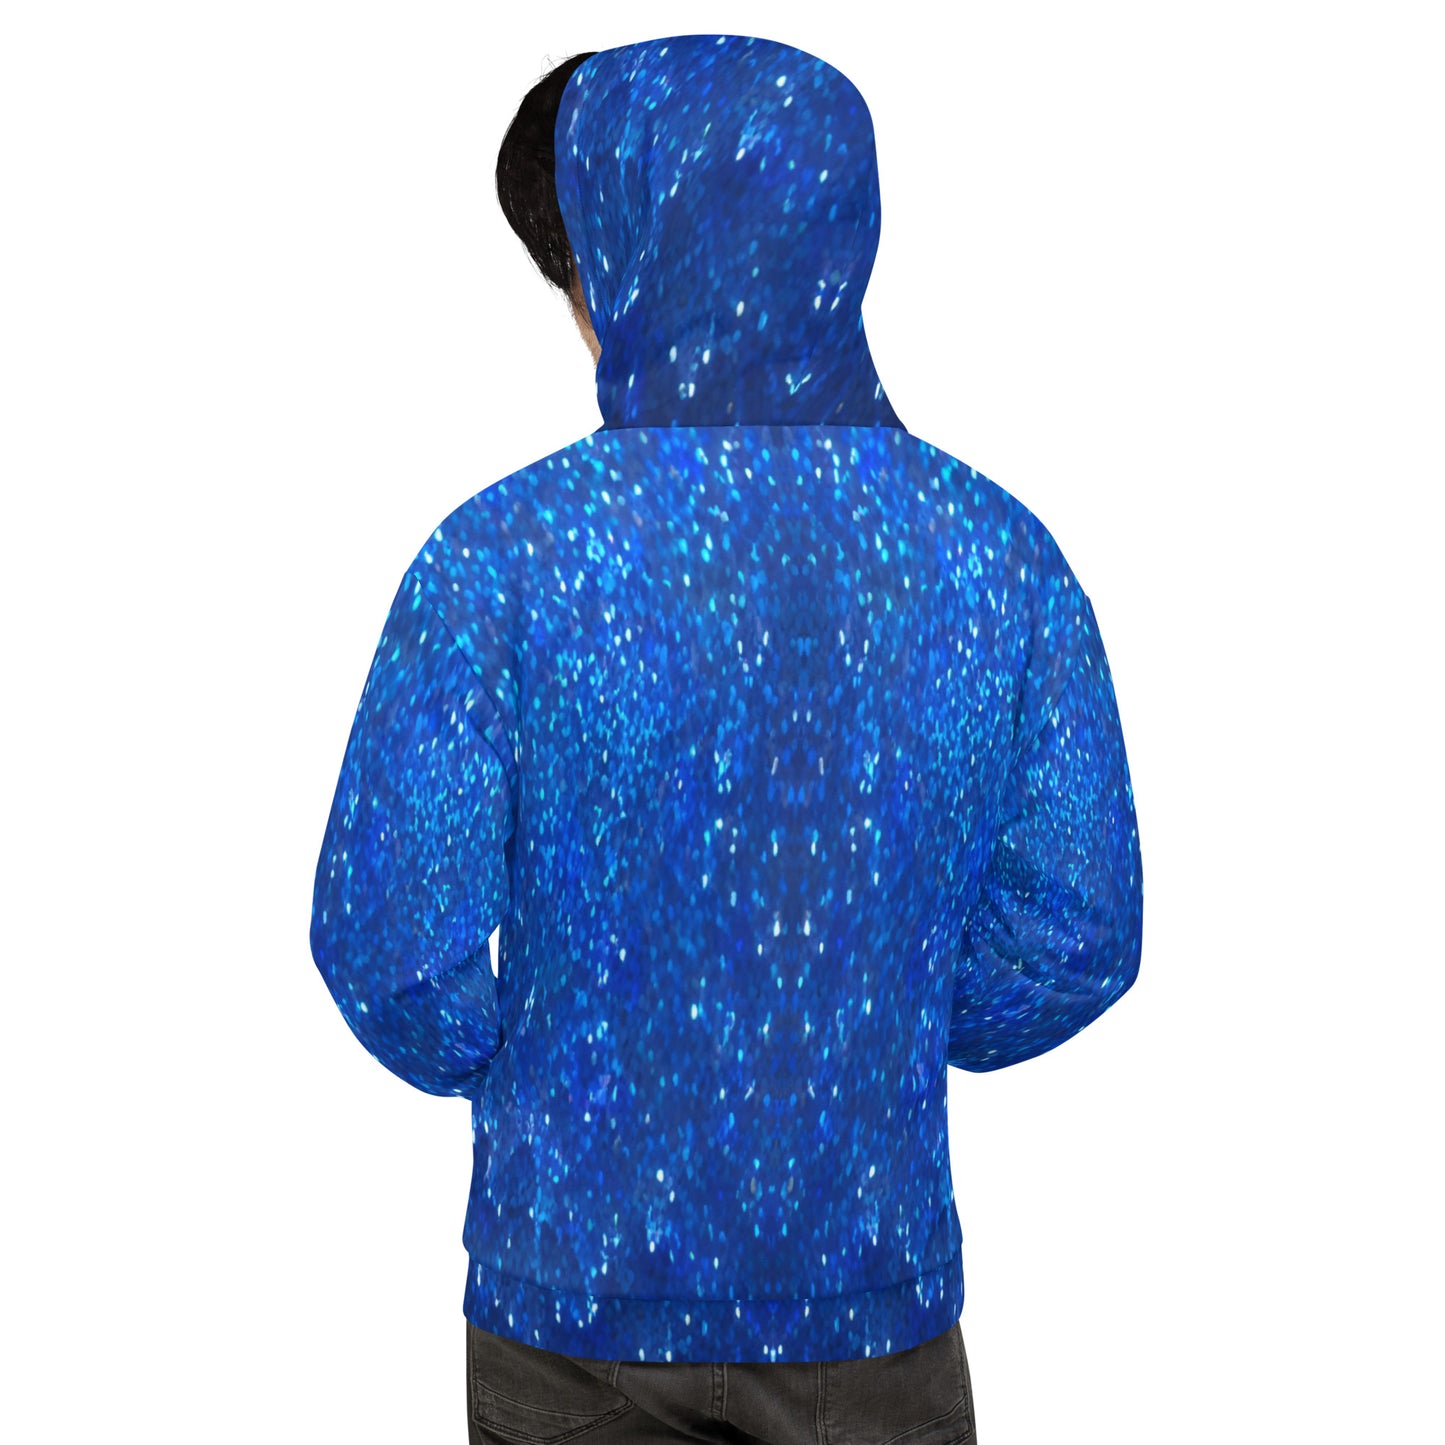 Blue Glitter Custom Print Unisex Hoodie